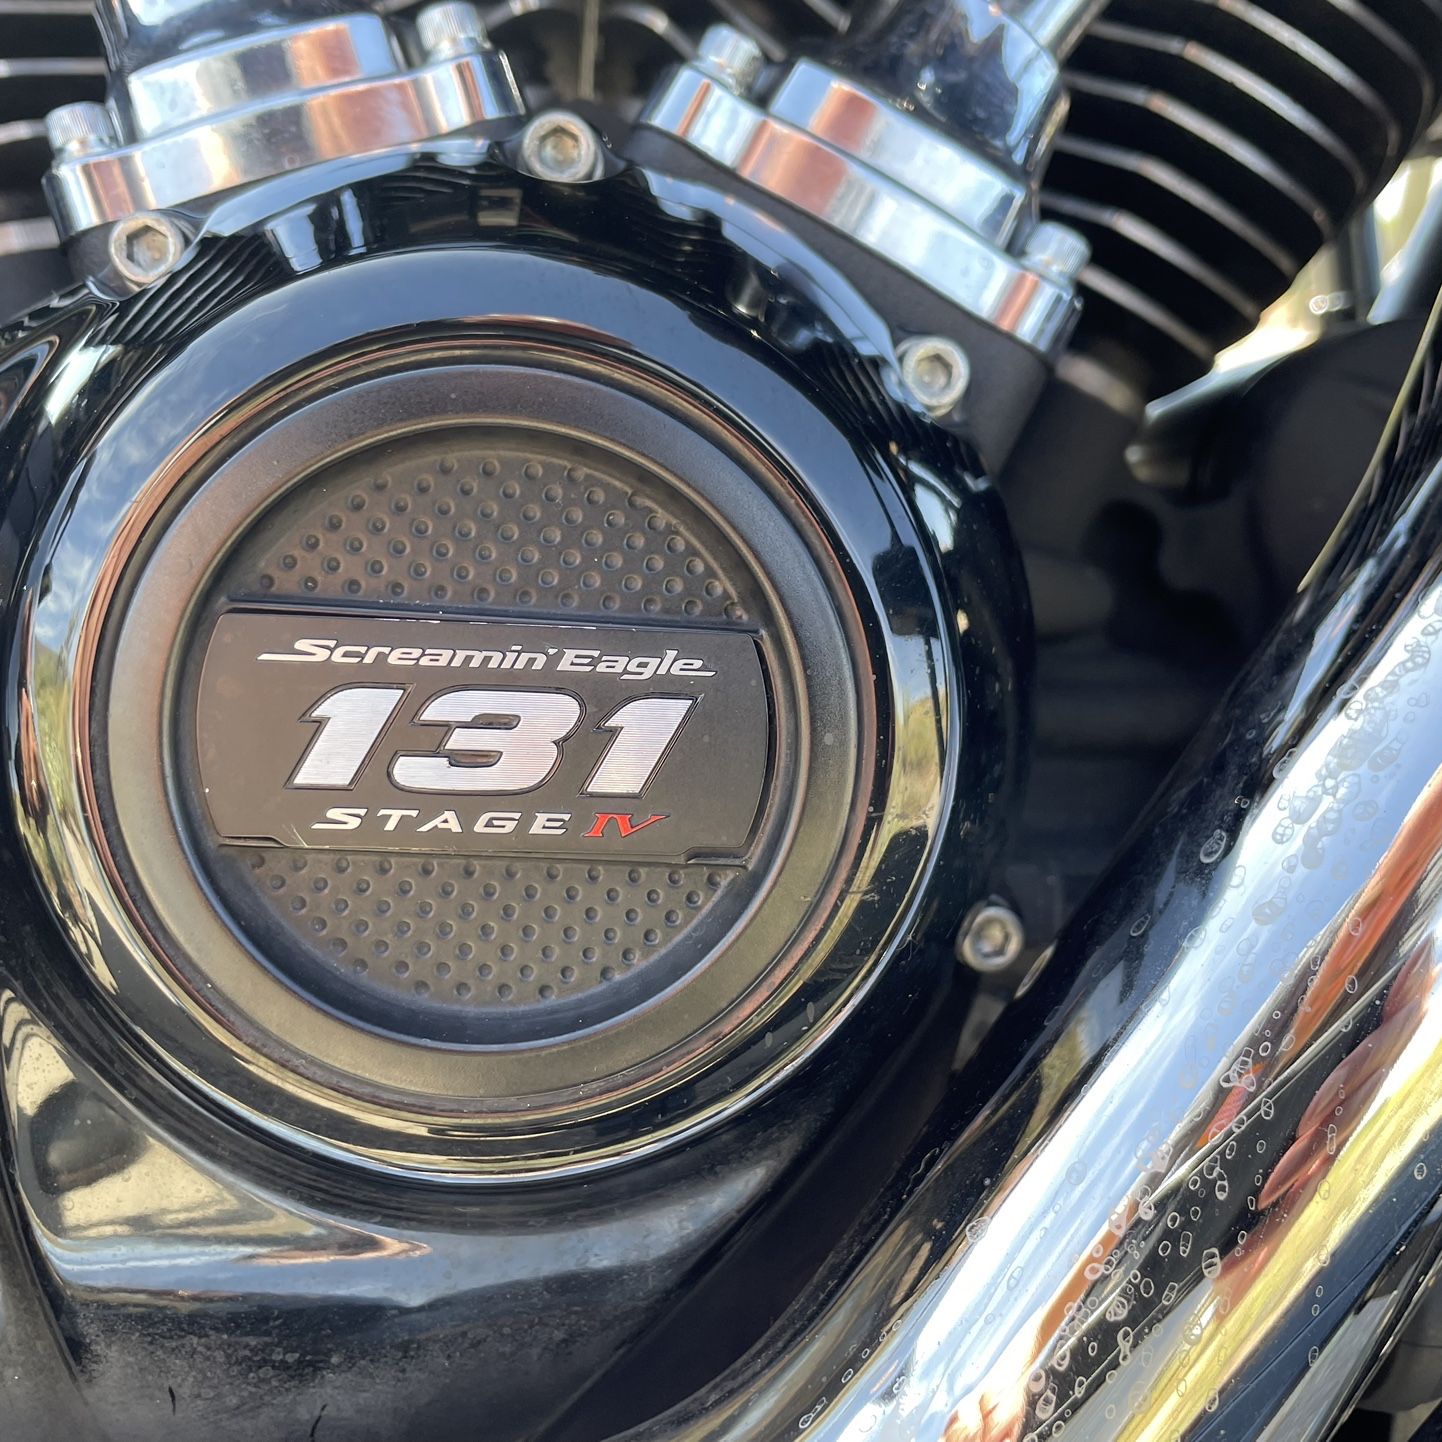 2020 Harley Davidson Special